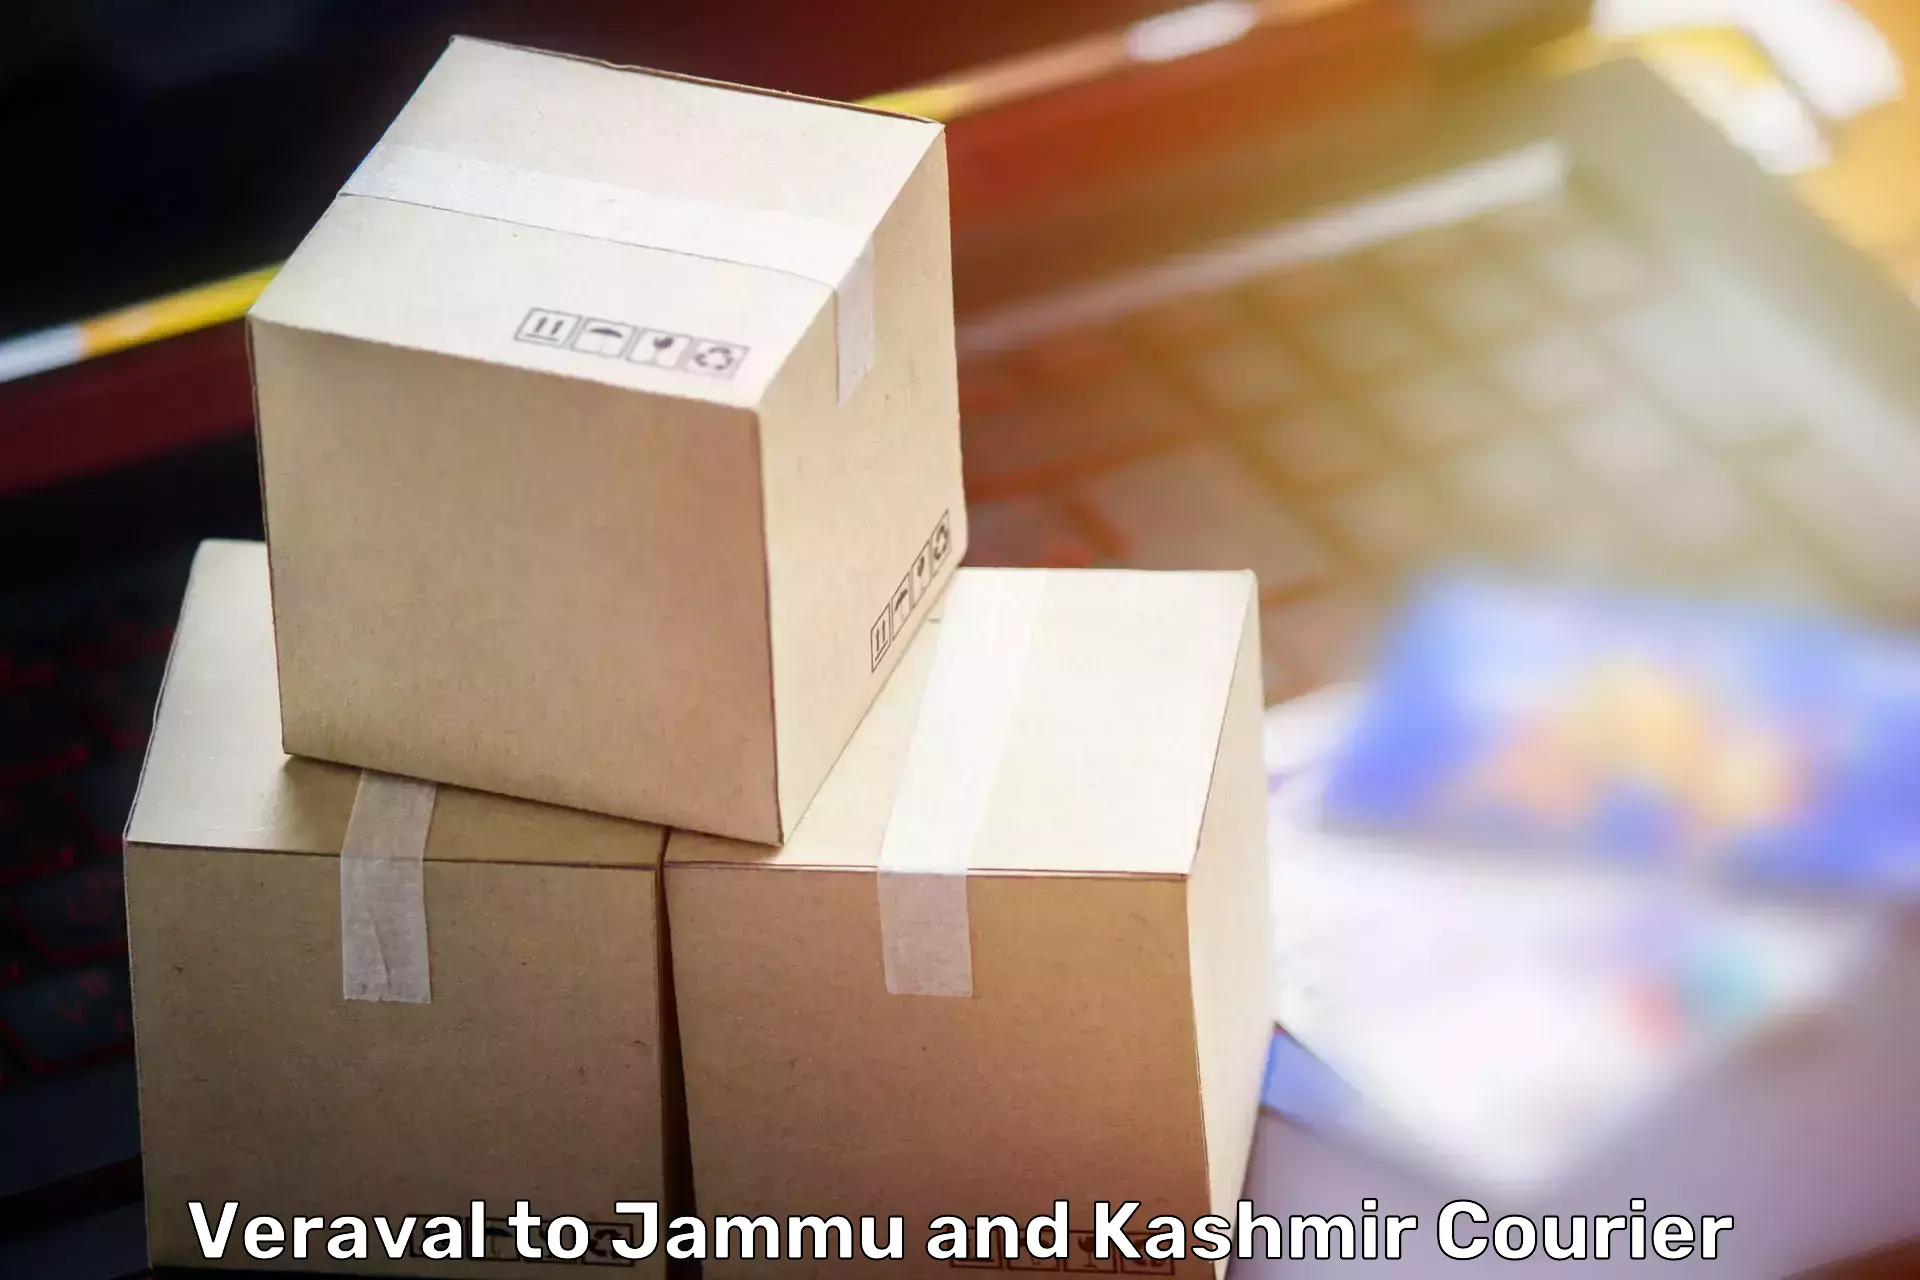 Furniture transport company Veraval to University of Jammu